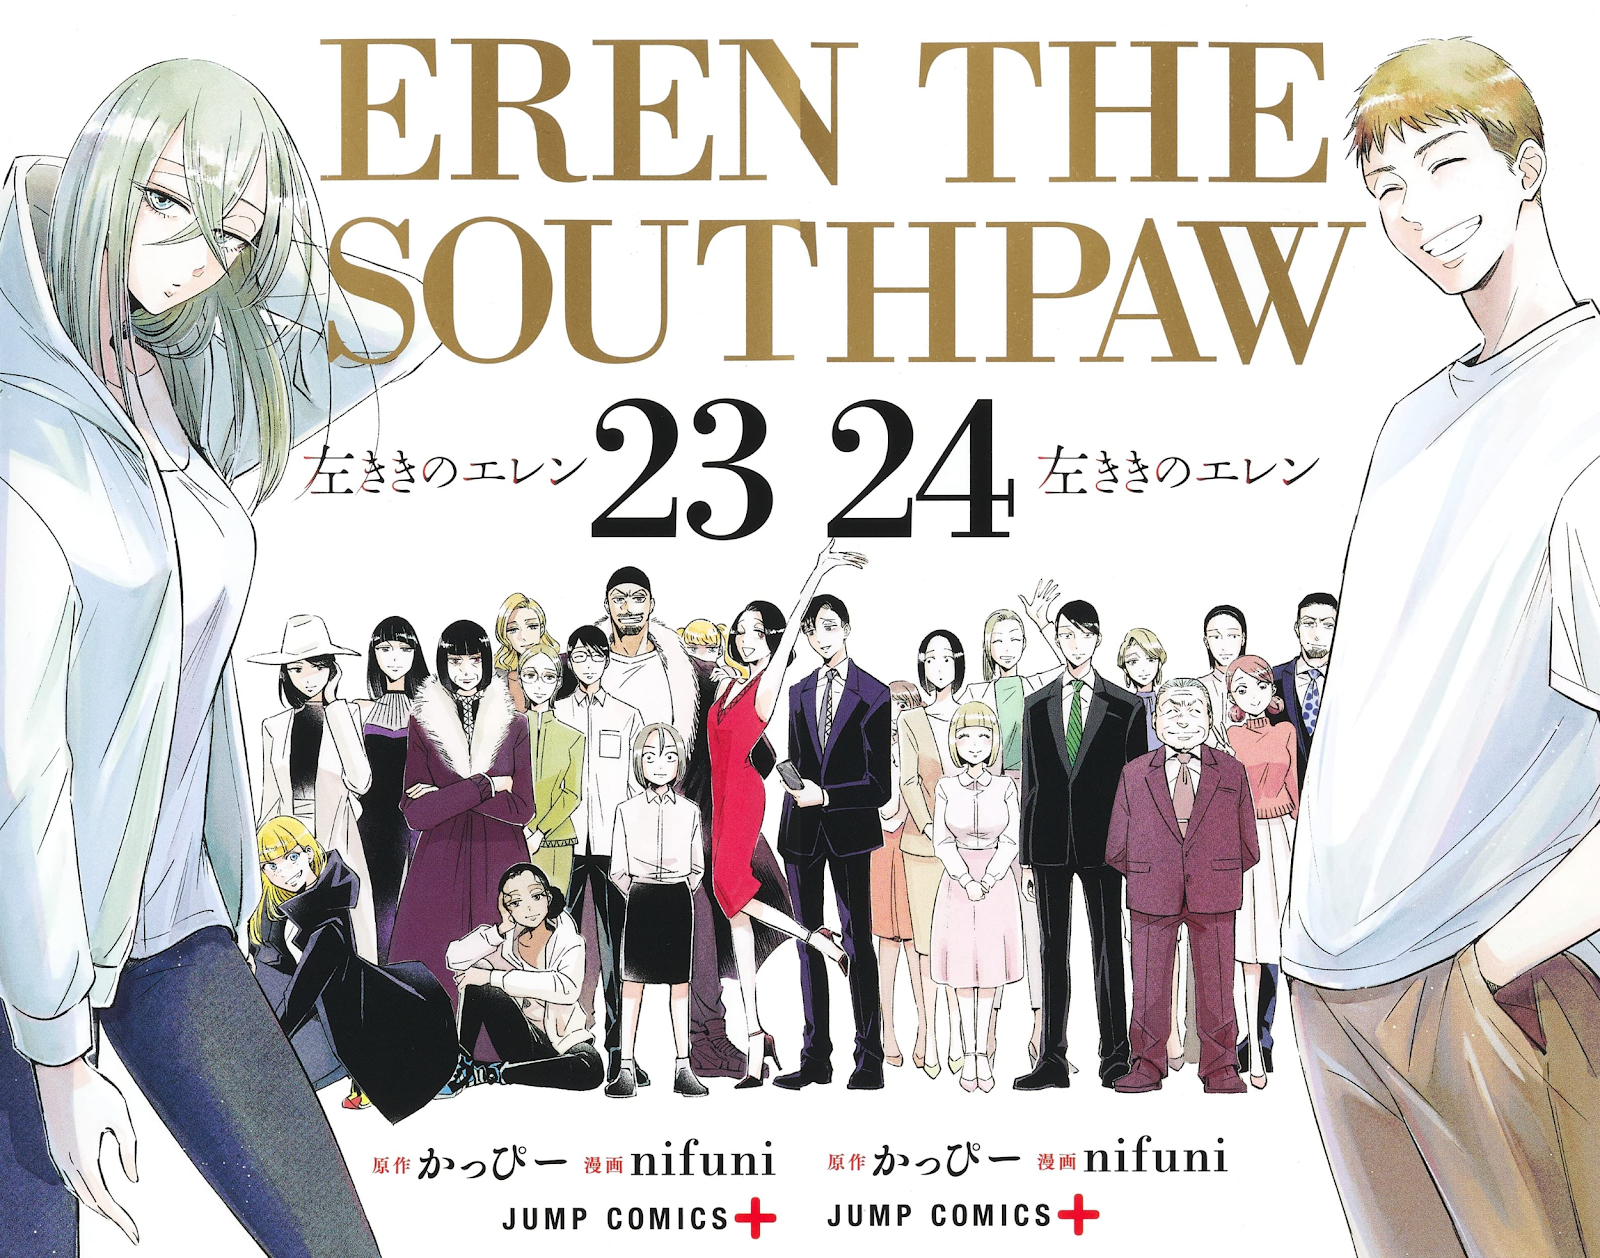 Hidarikiki no Eren, 左ききのエレン, Eren the Southpaw